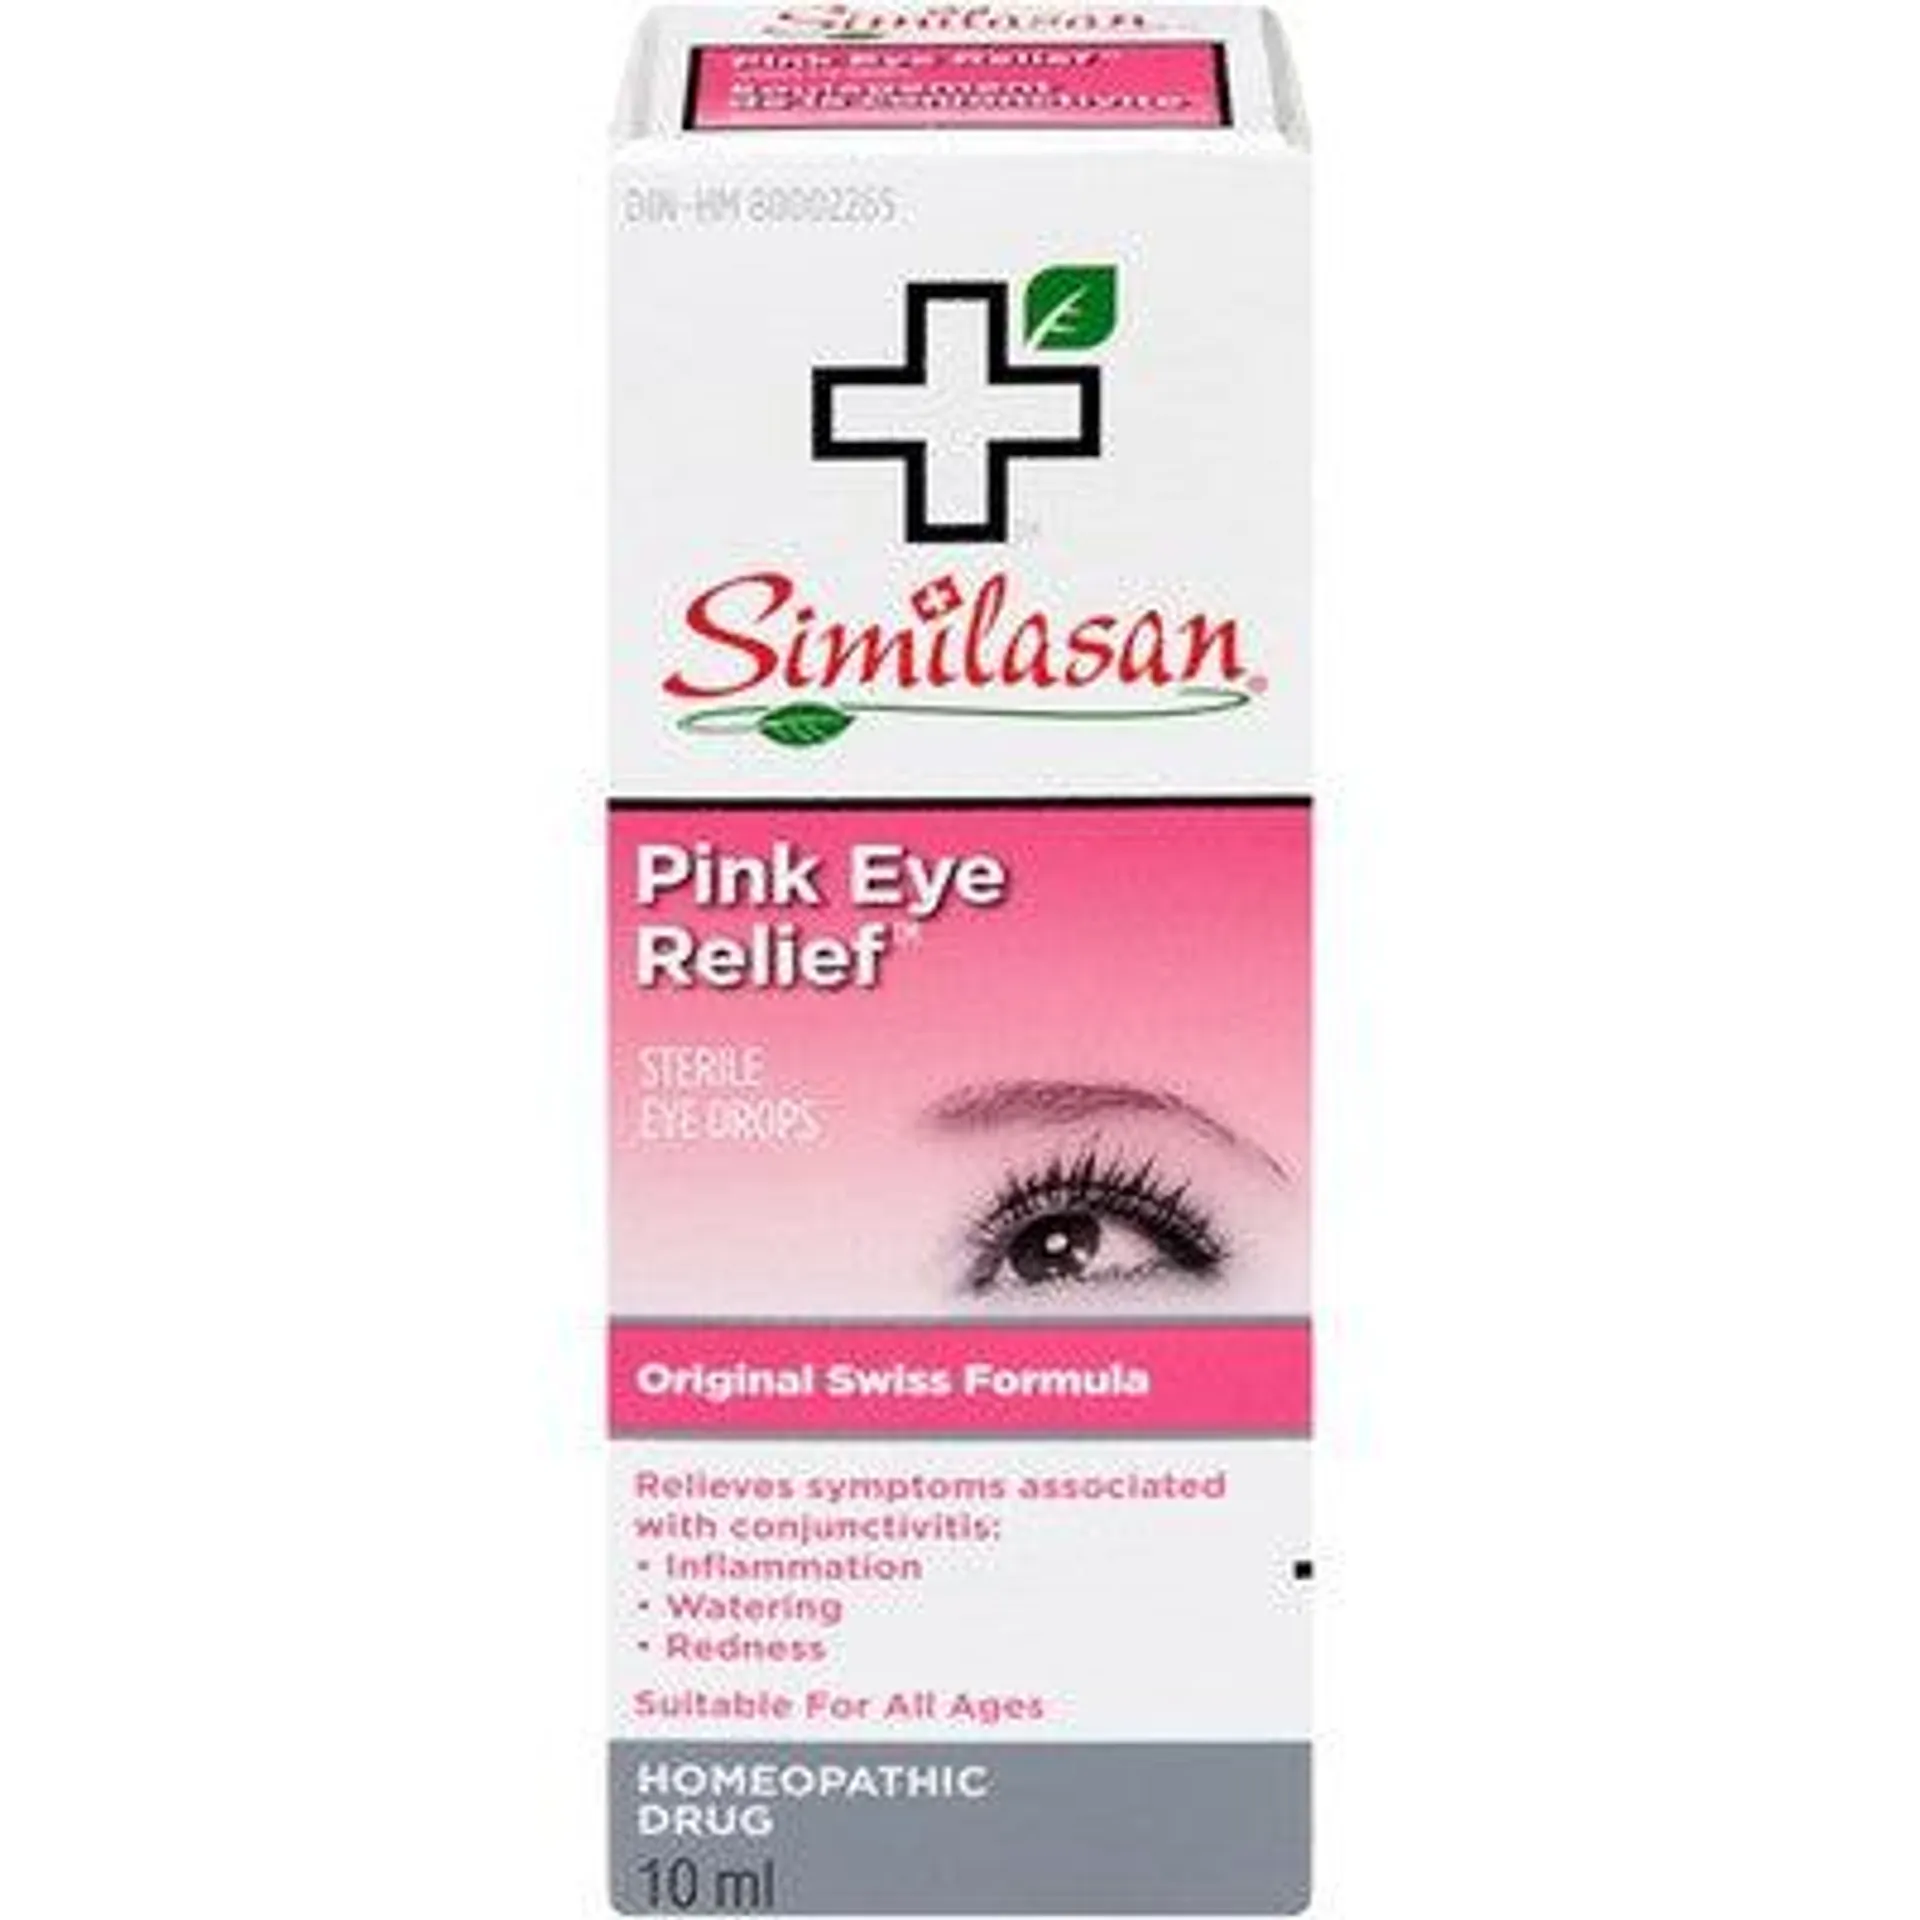 Pink Eye Relief Drops